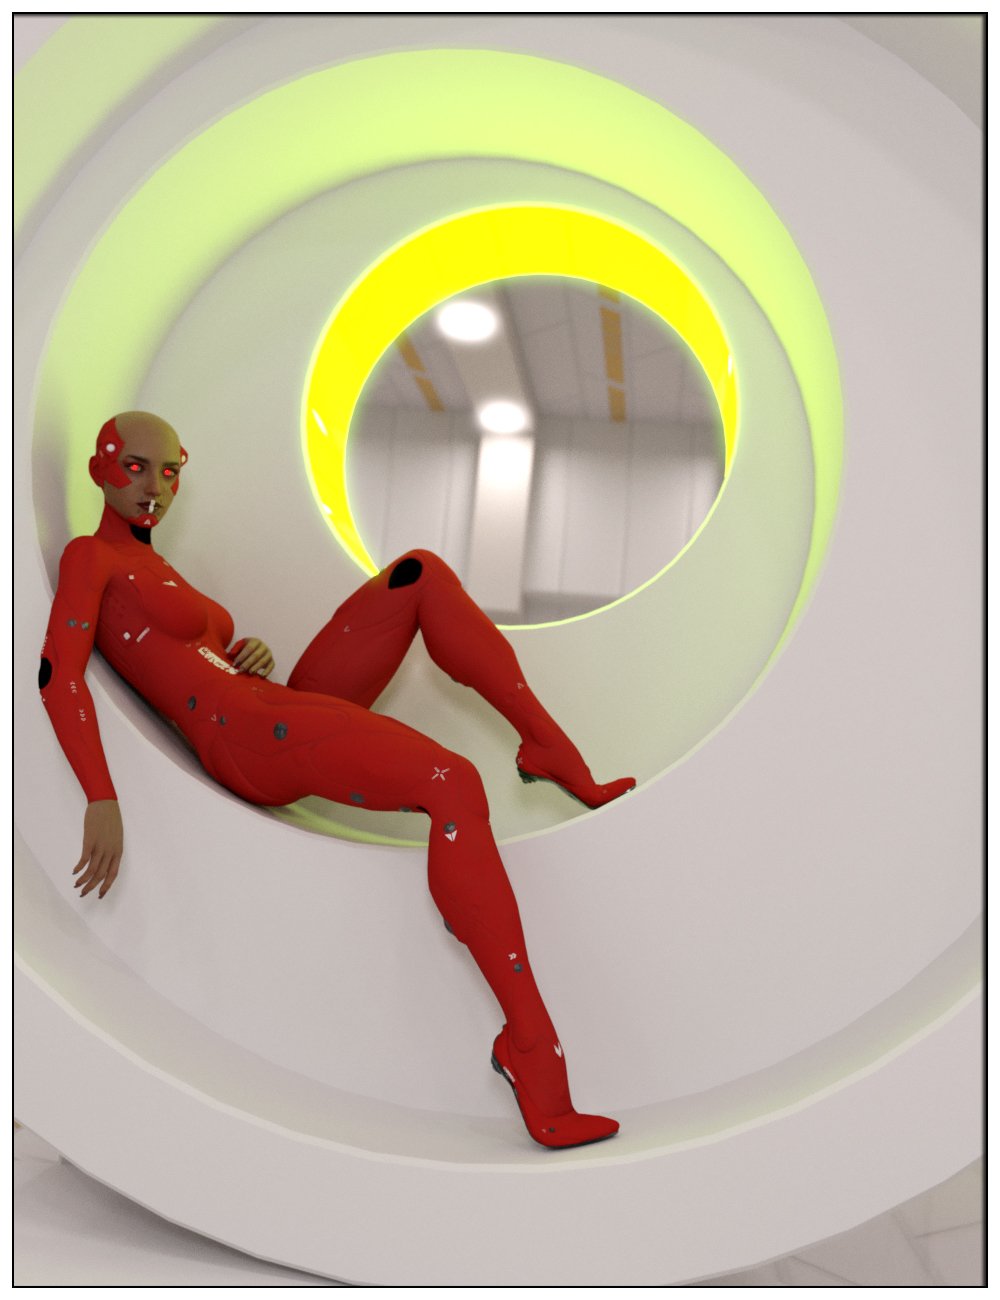 CyberDream Karla 2.0 for Genesis 8 Female by: Nathy Design, 3D Models by Daz 3D